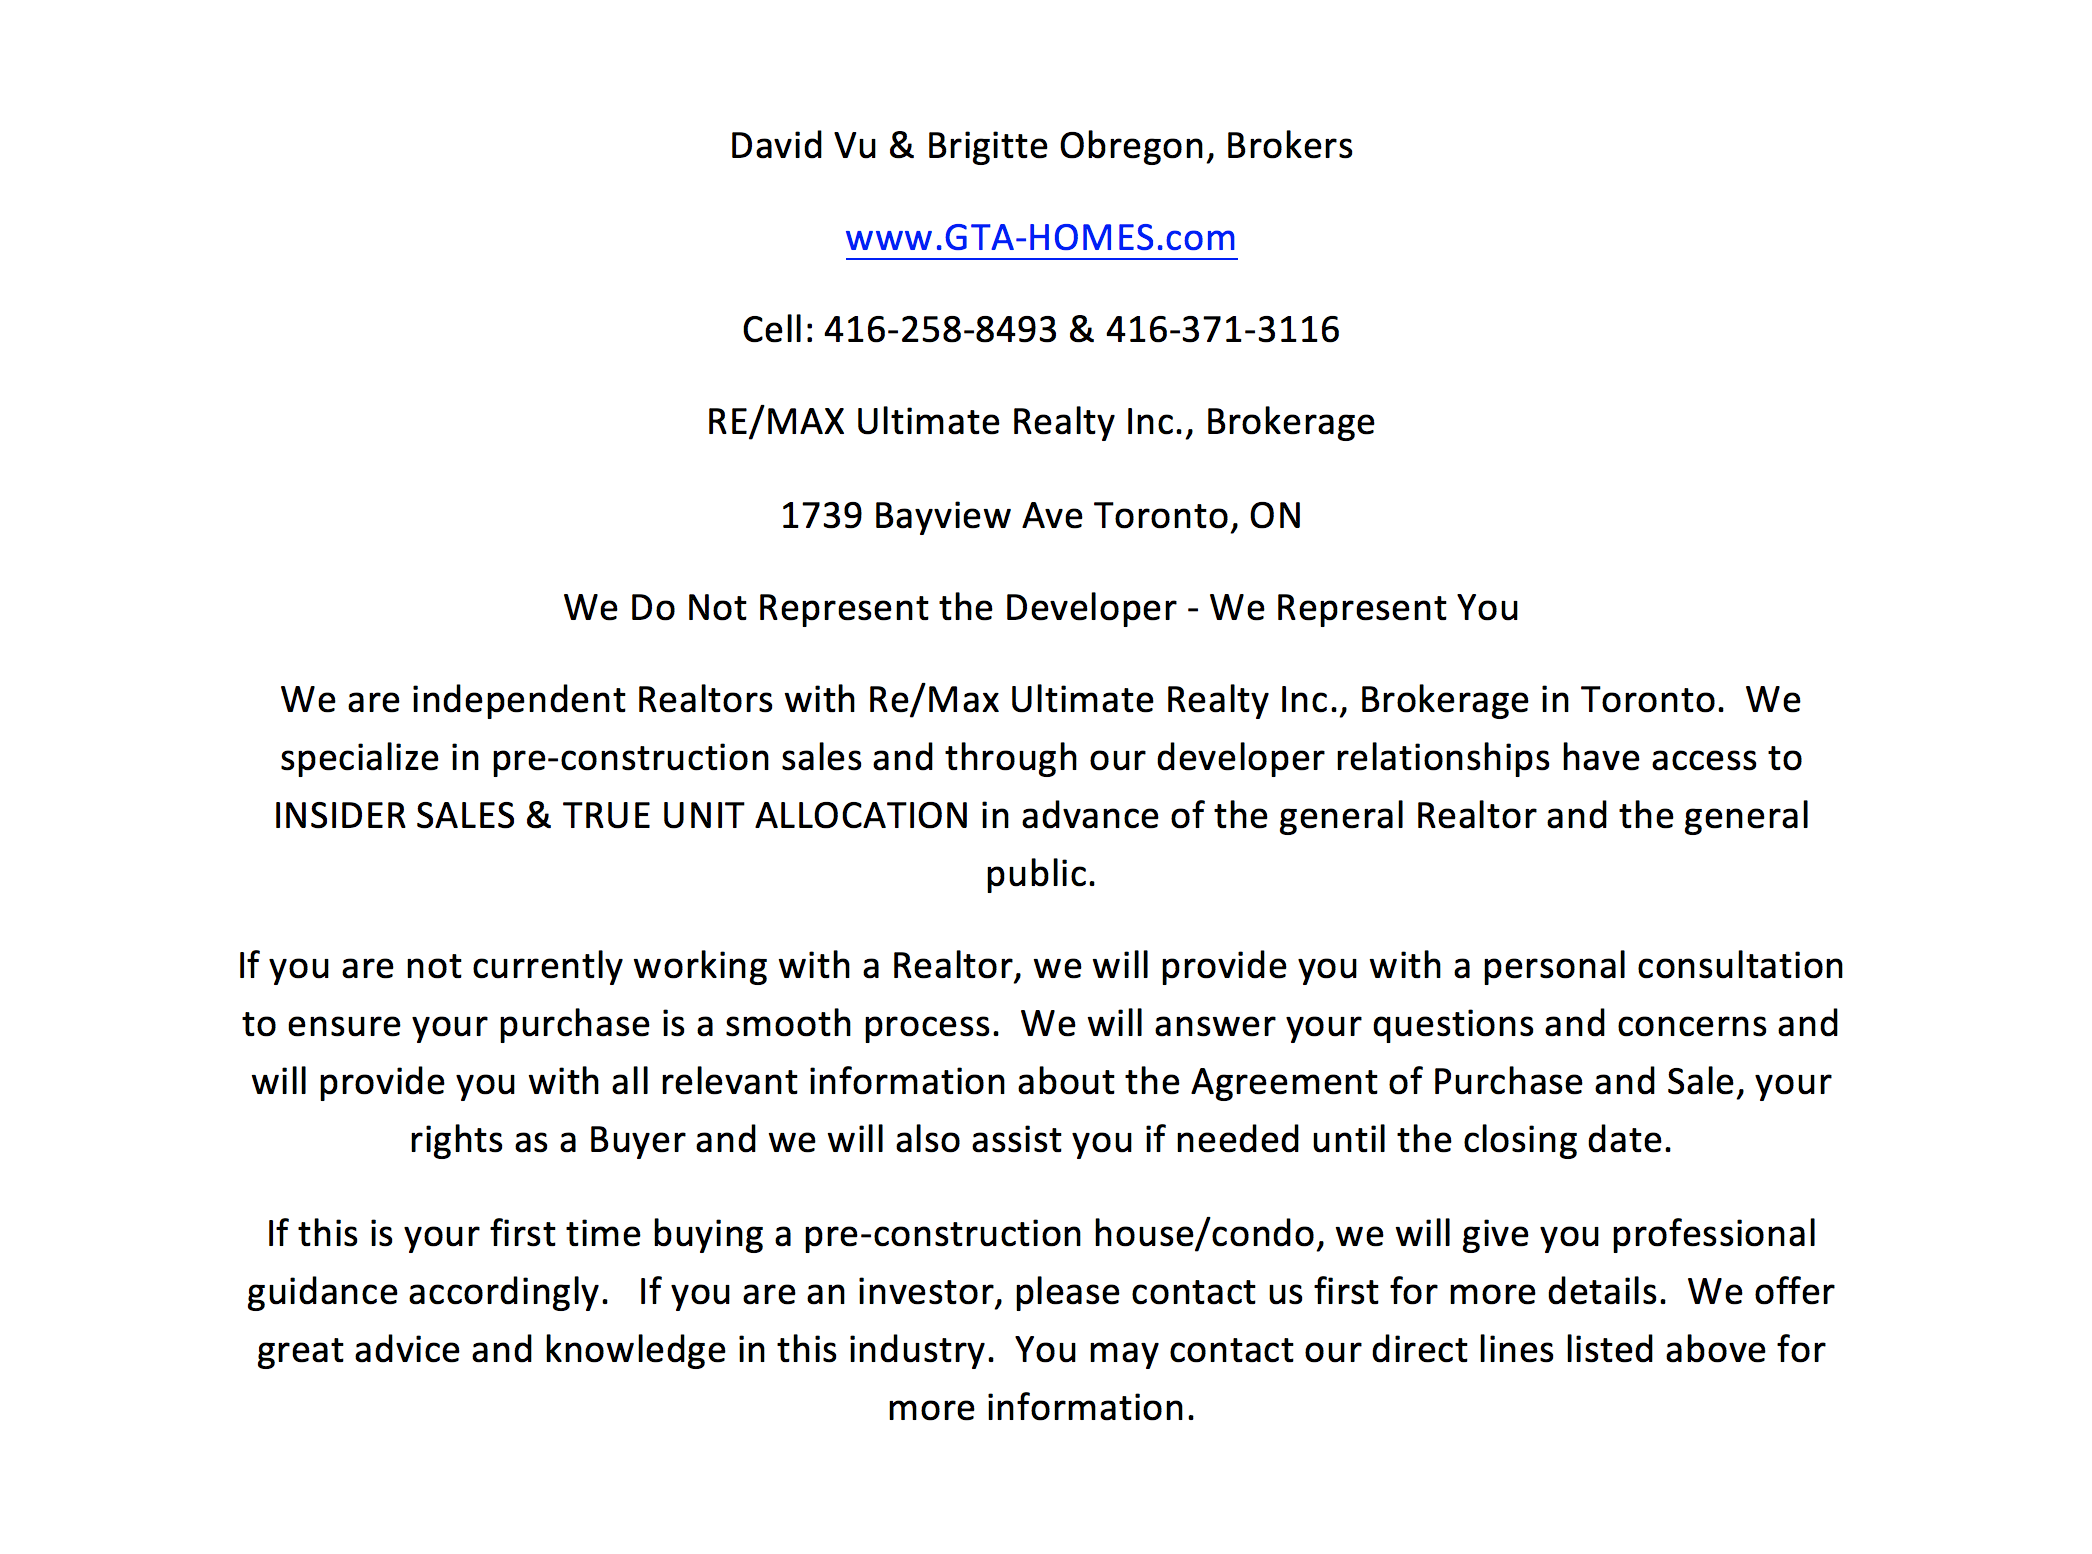 New Condo Sales Agents Contact Info